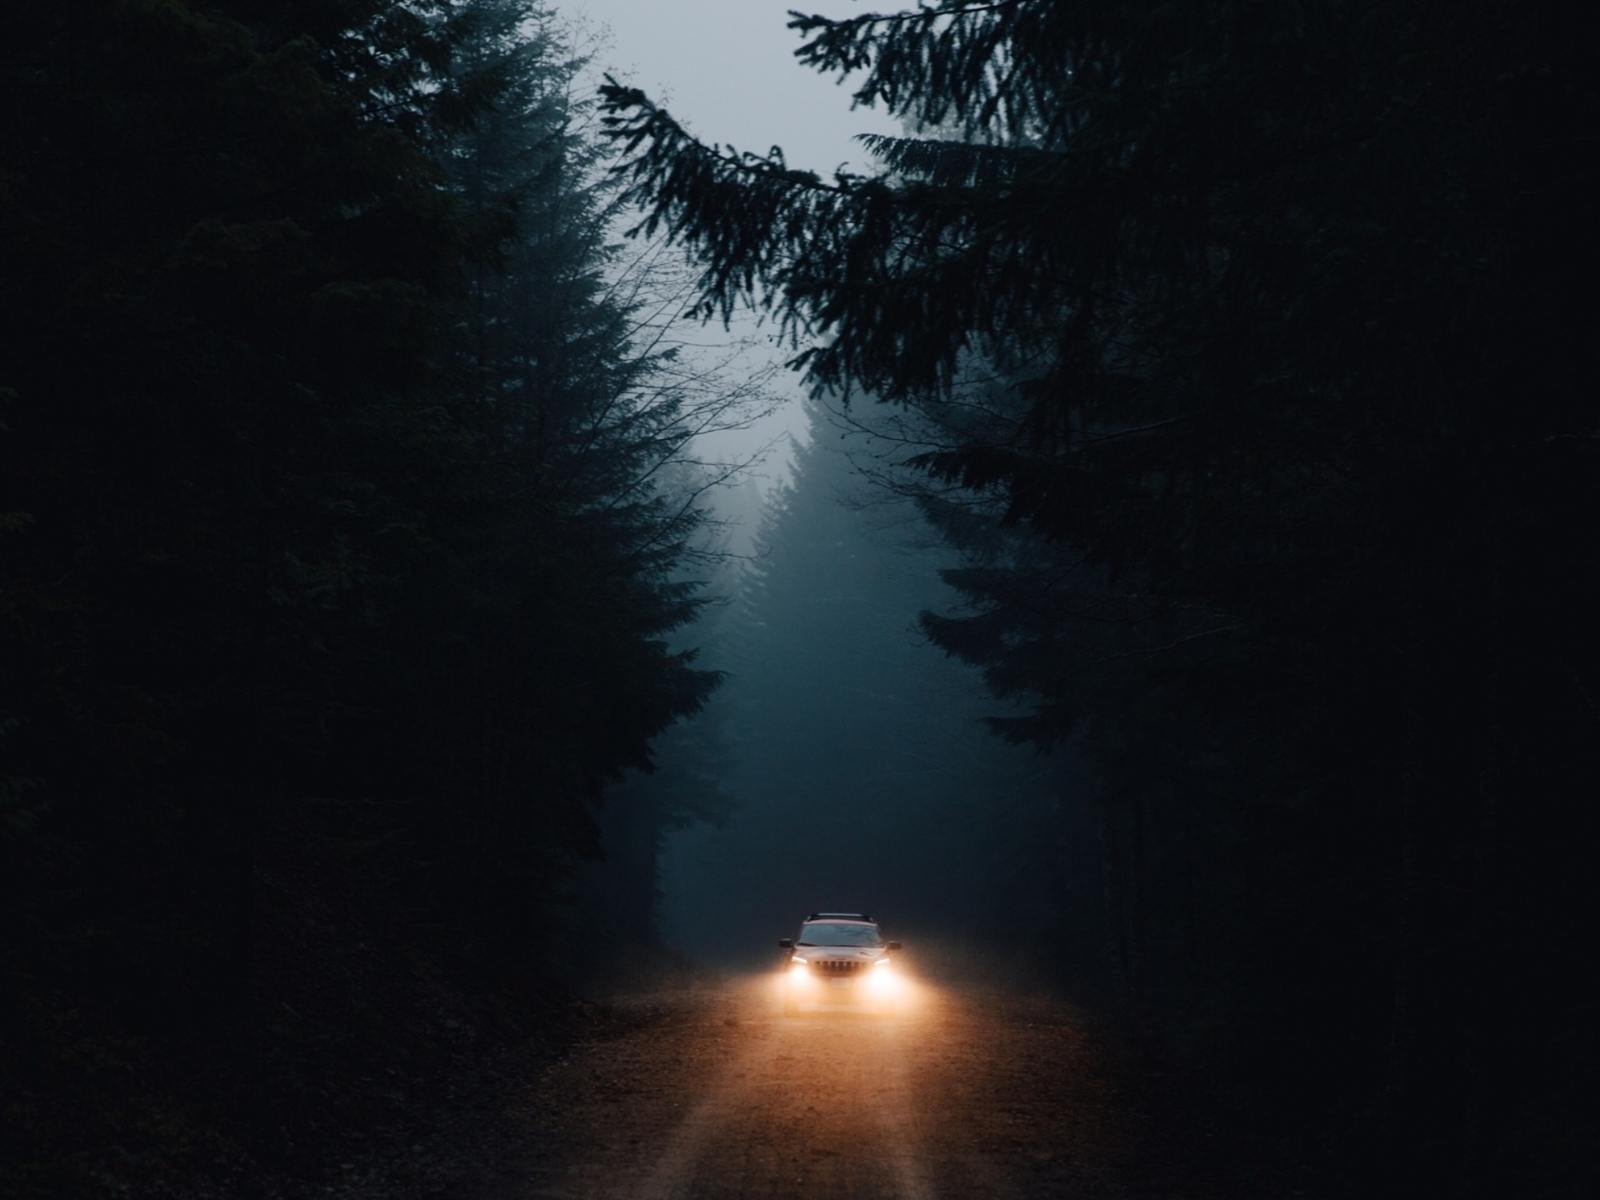 Ночь дорога свет фар. Ночная дорога. Дорога в лесу ночью. Ночной лес у дороги. Лесная дорога ночью.